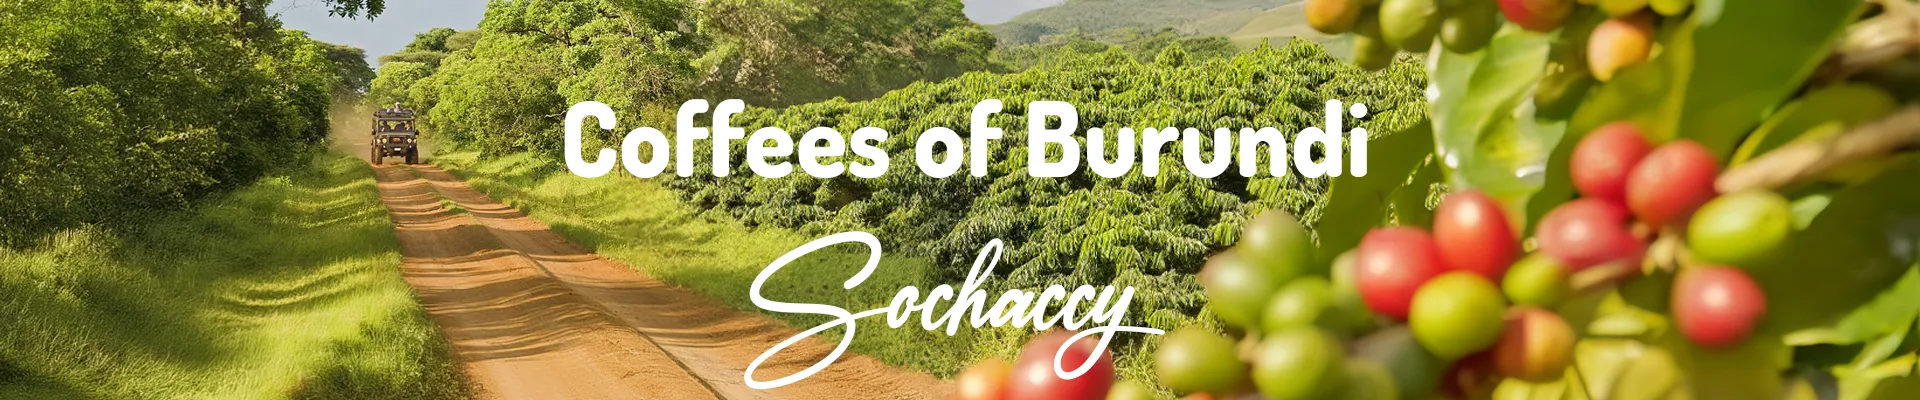 Coffees of Burundi